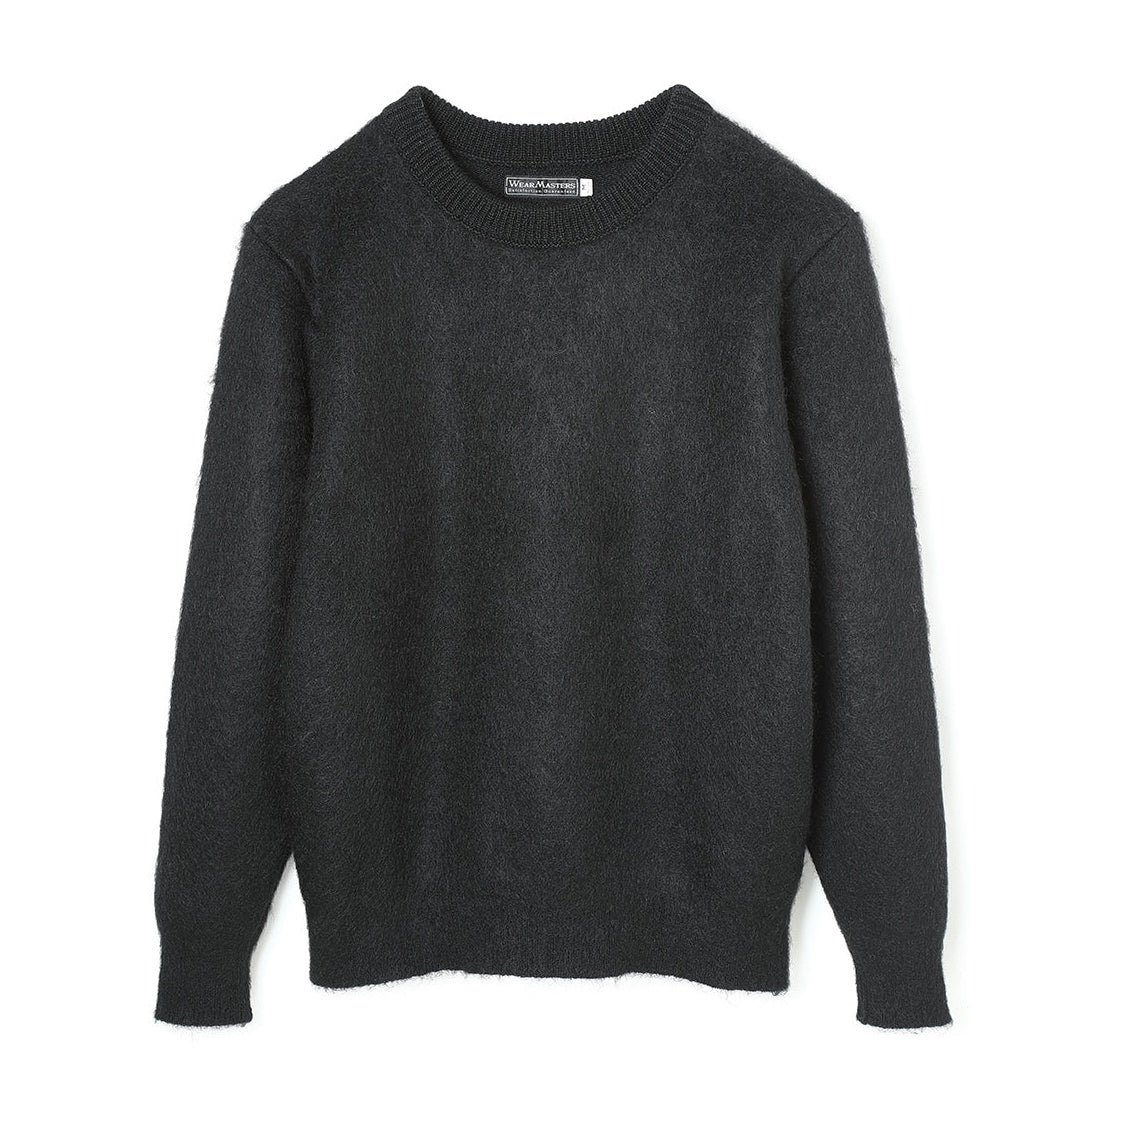 WearMasters - Lot.811 Mohair Crew Neck Sweater (Black)